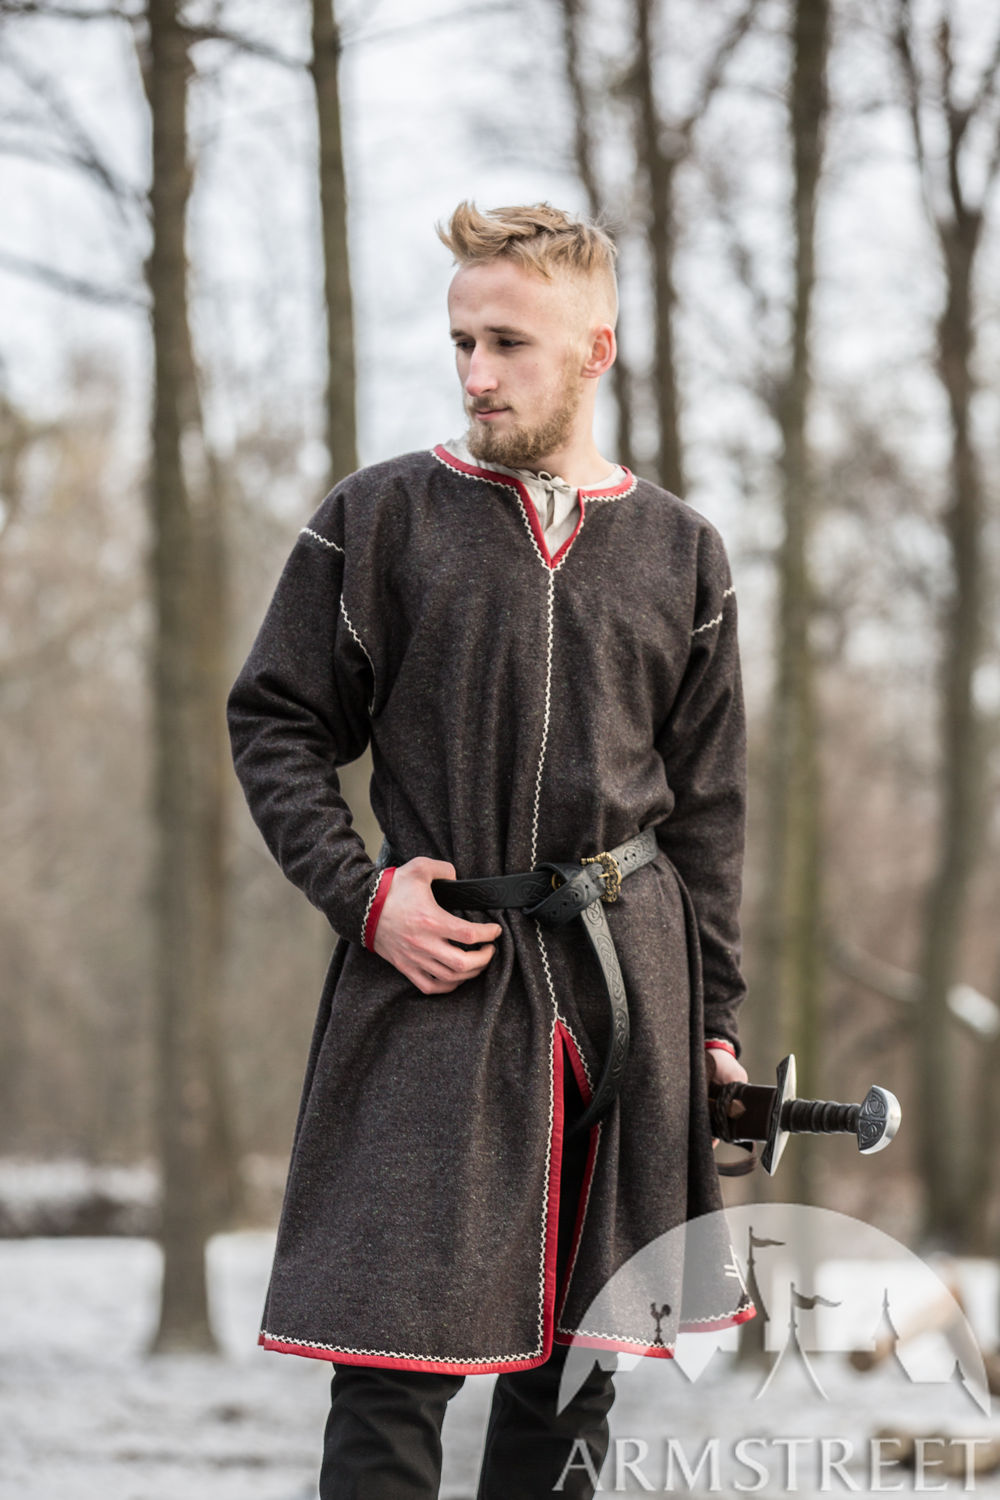 Limited Graphite Wool Viking Tunic “Ragnvaldur the Traveller”